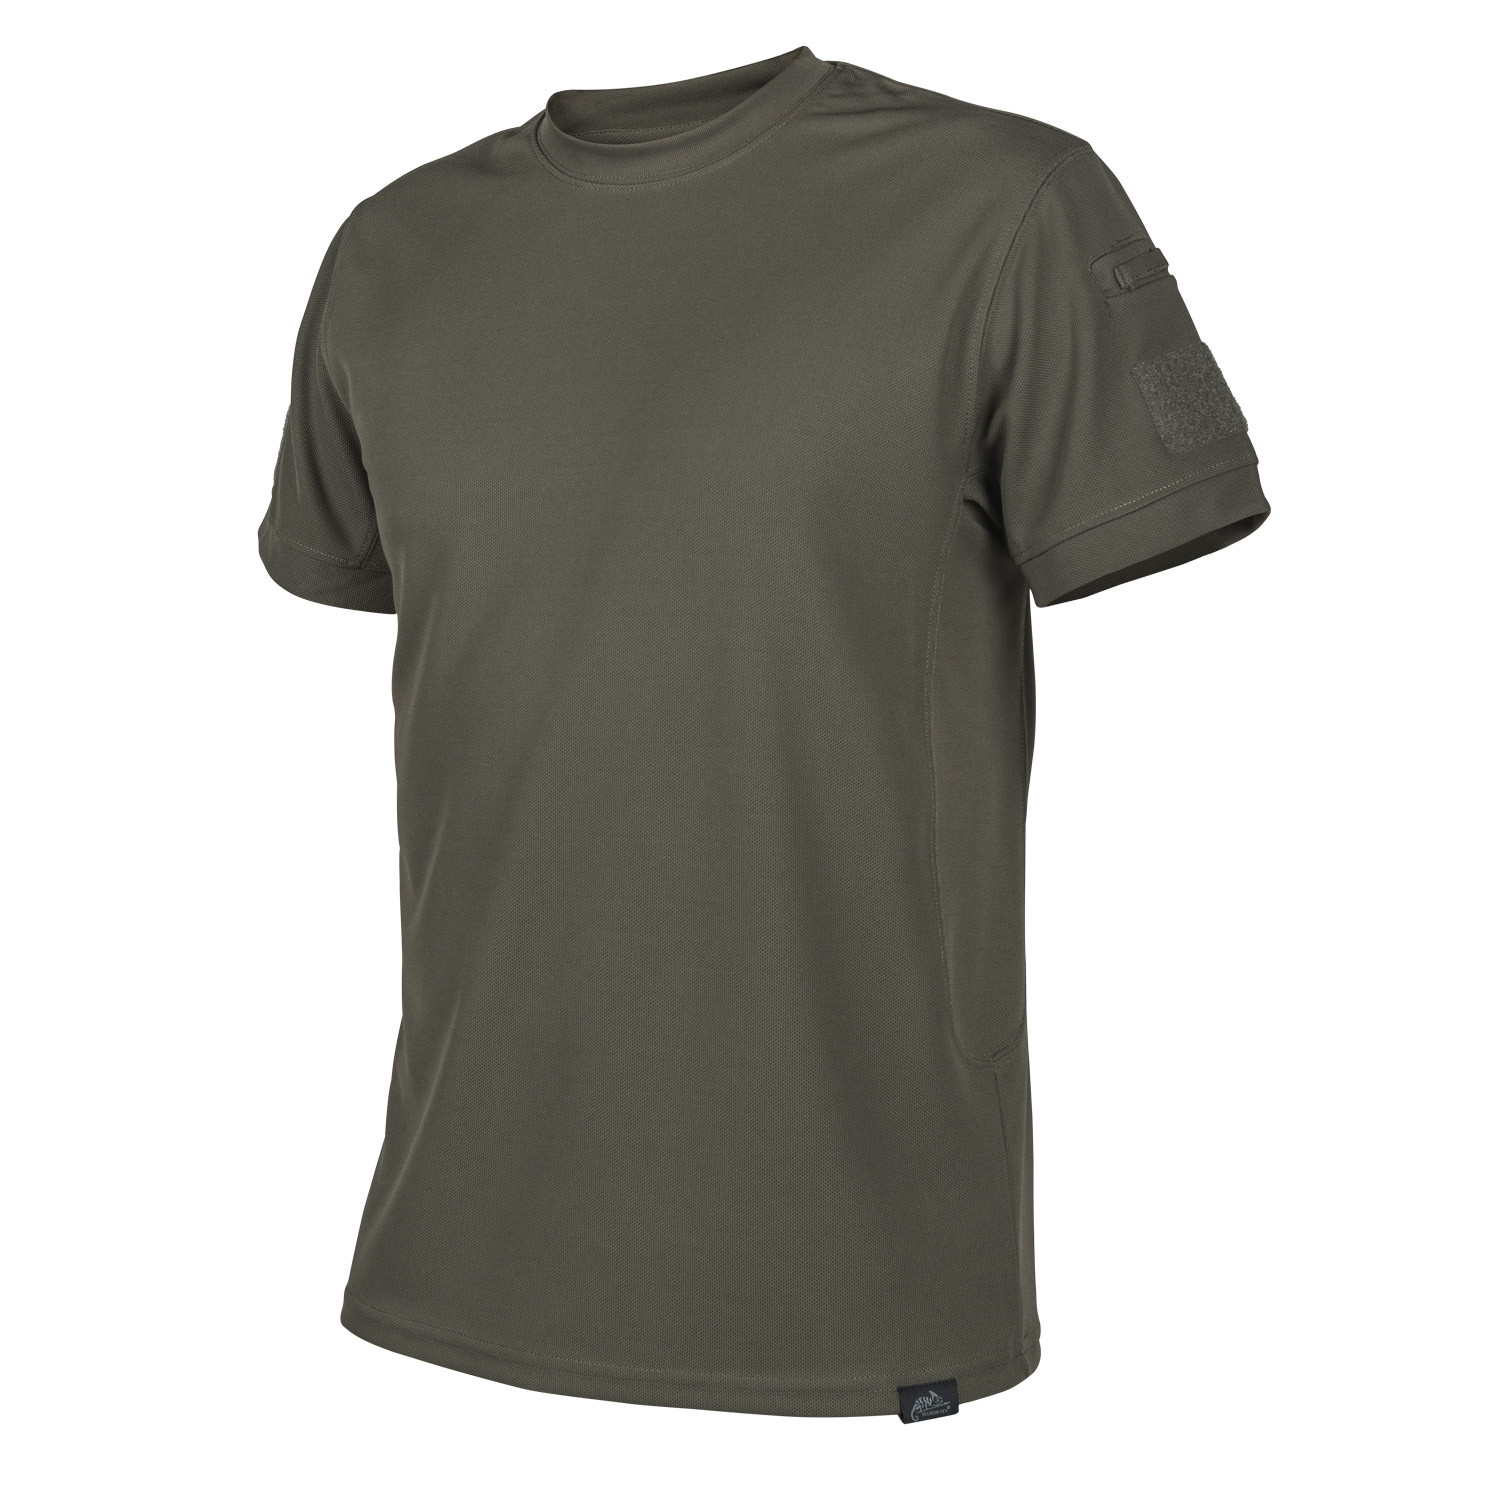 Helikon TACTICAL T-Shirt - TopCool - olive green